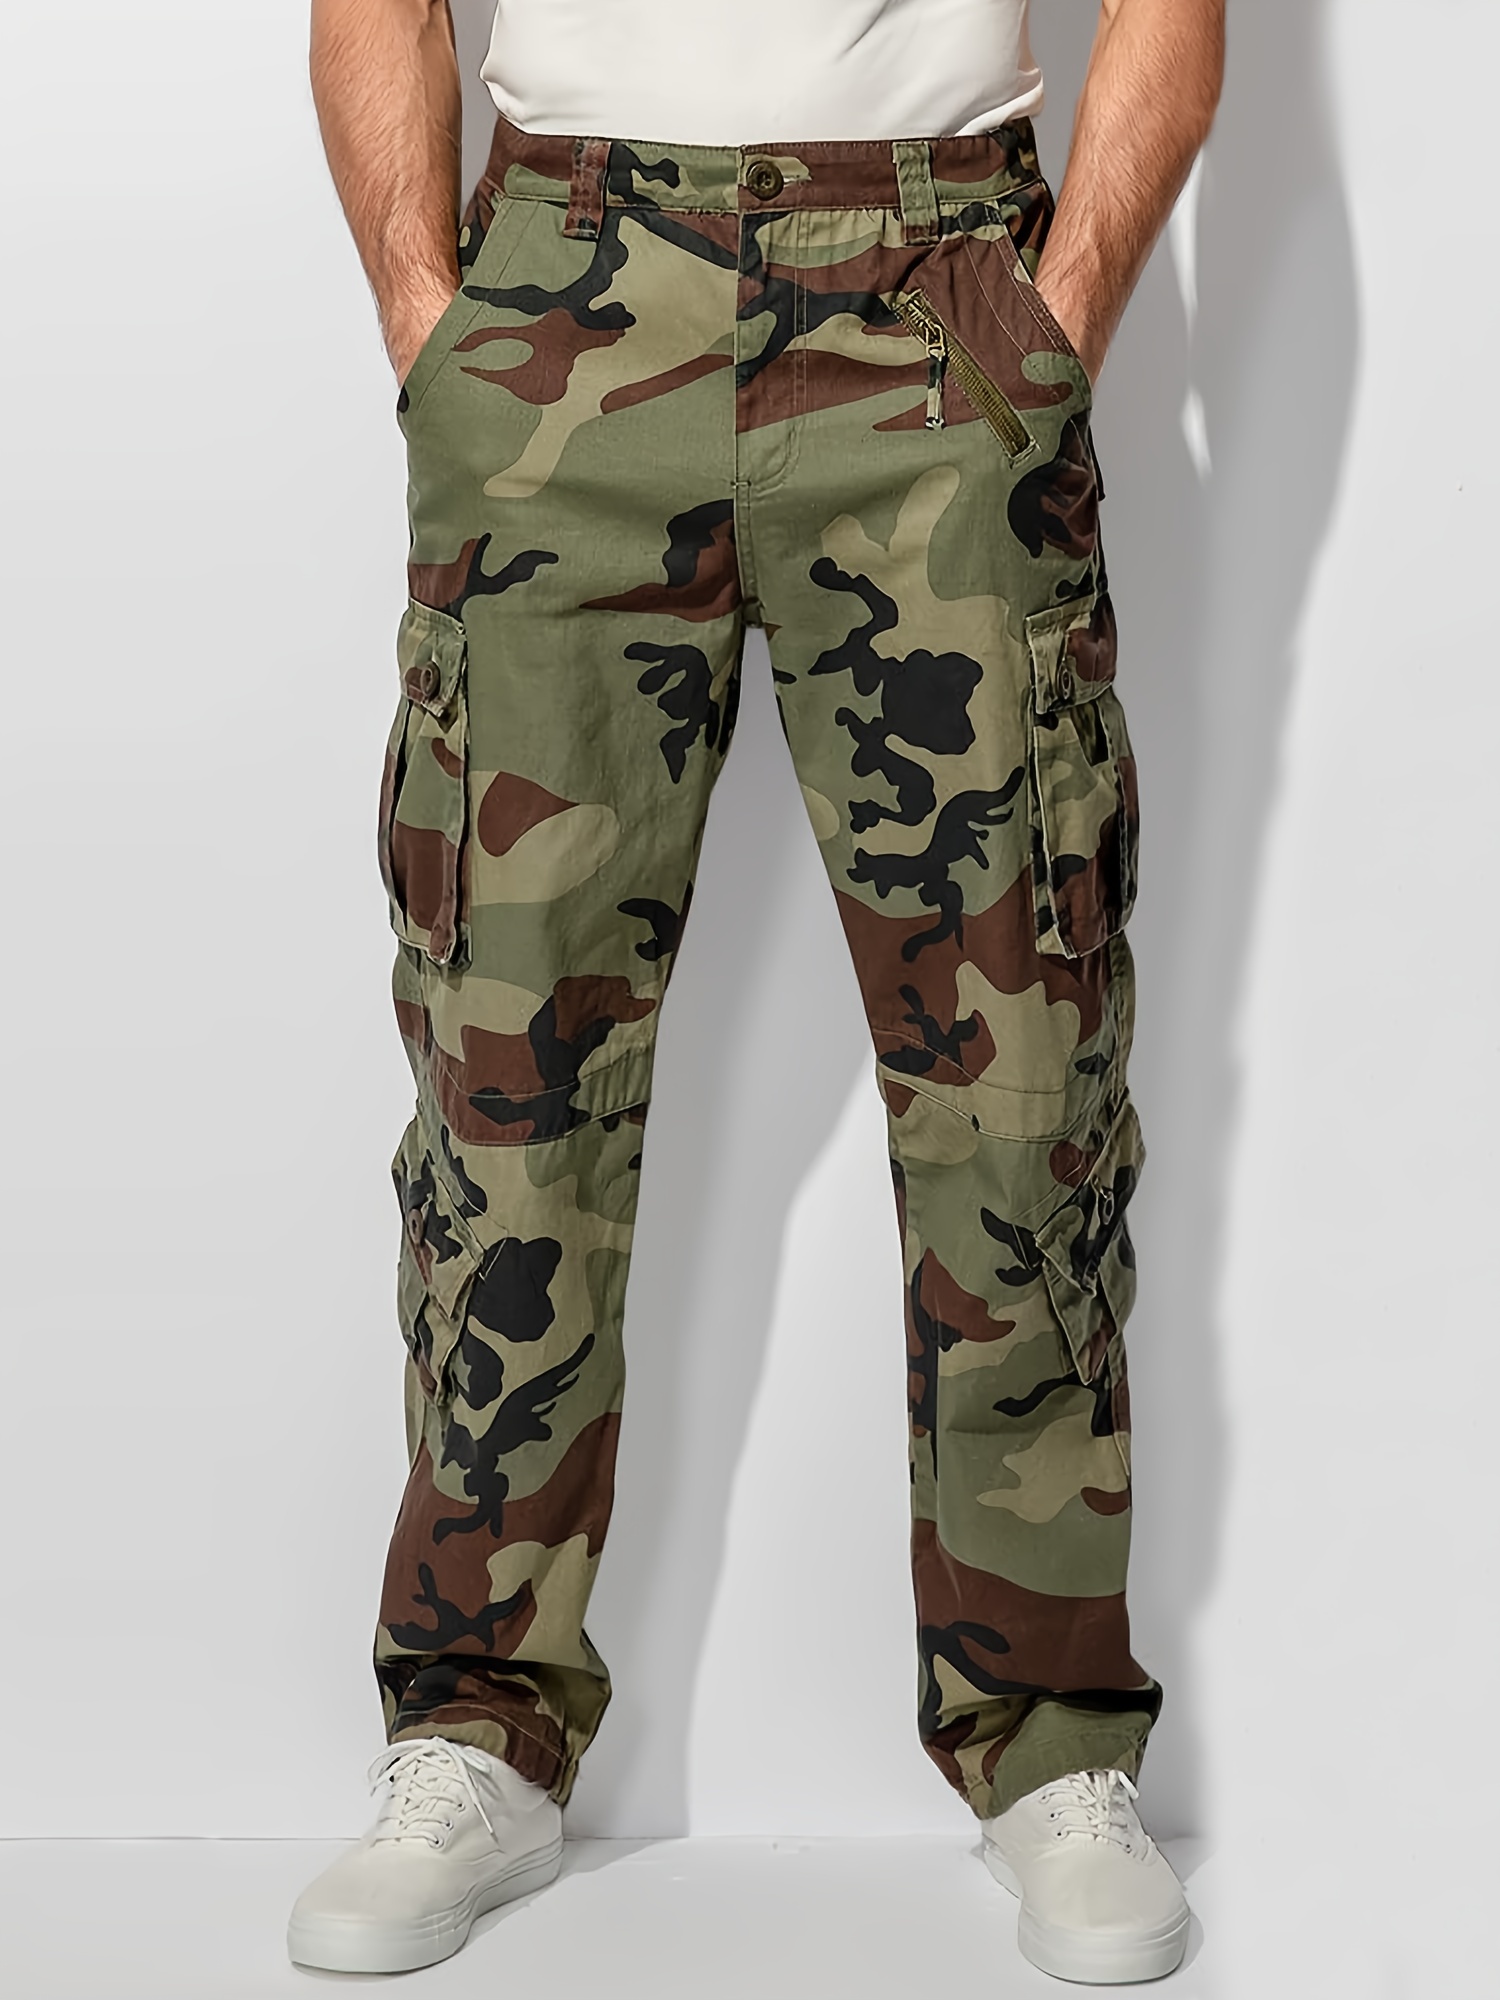 Pantalones militares de camuflaje para hombre, pantalón de combate